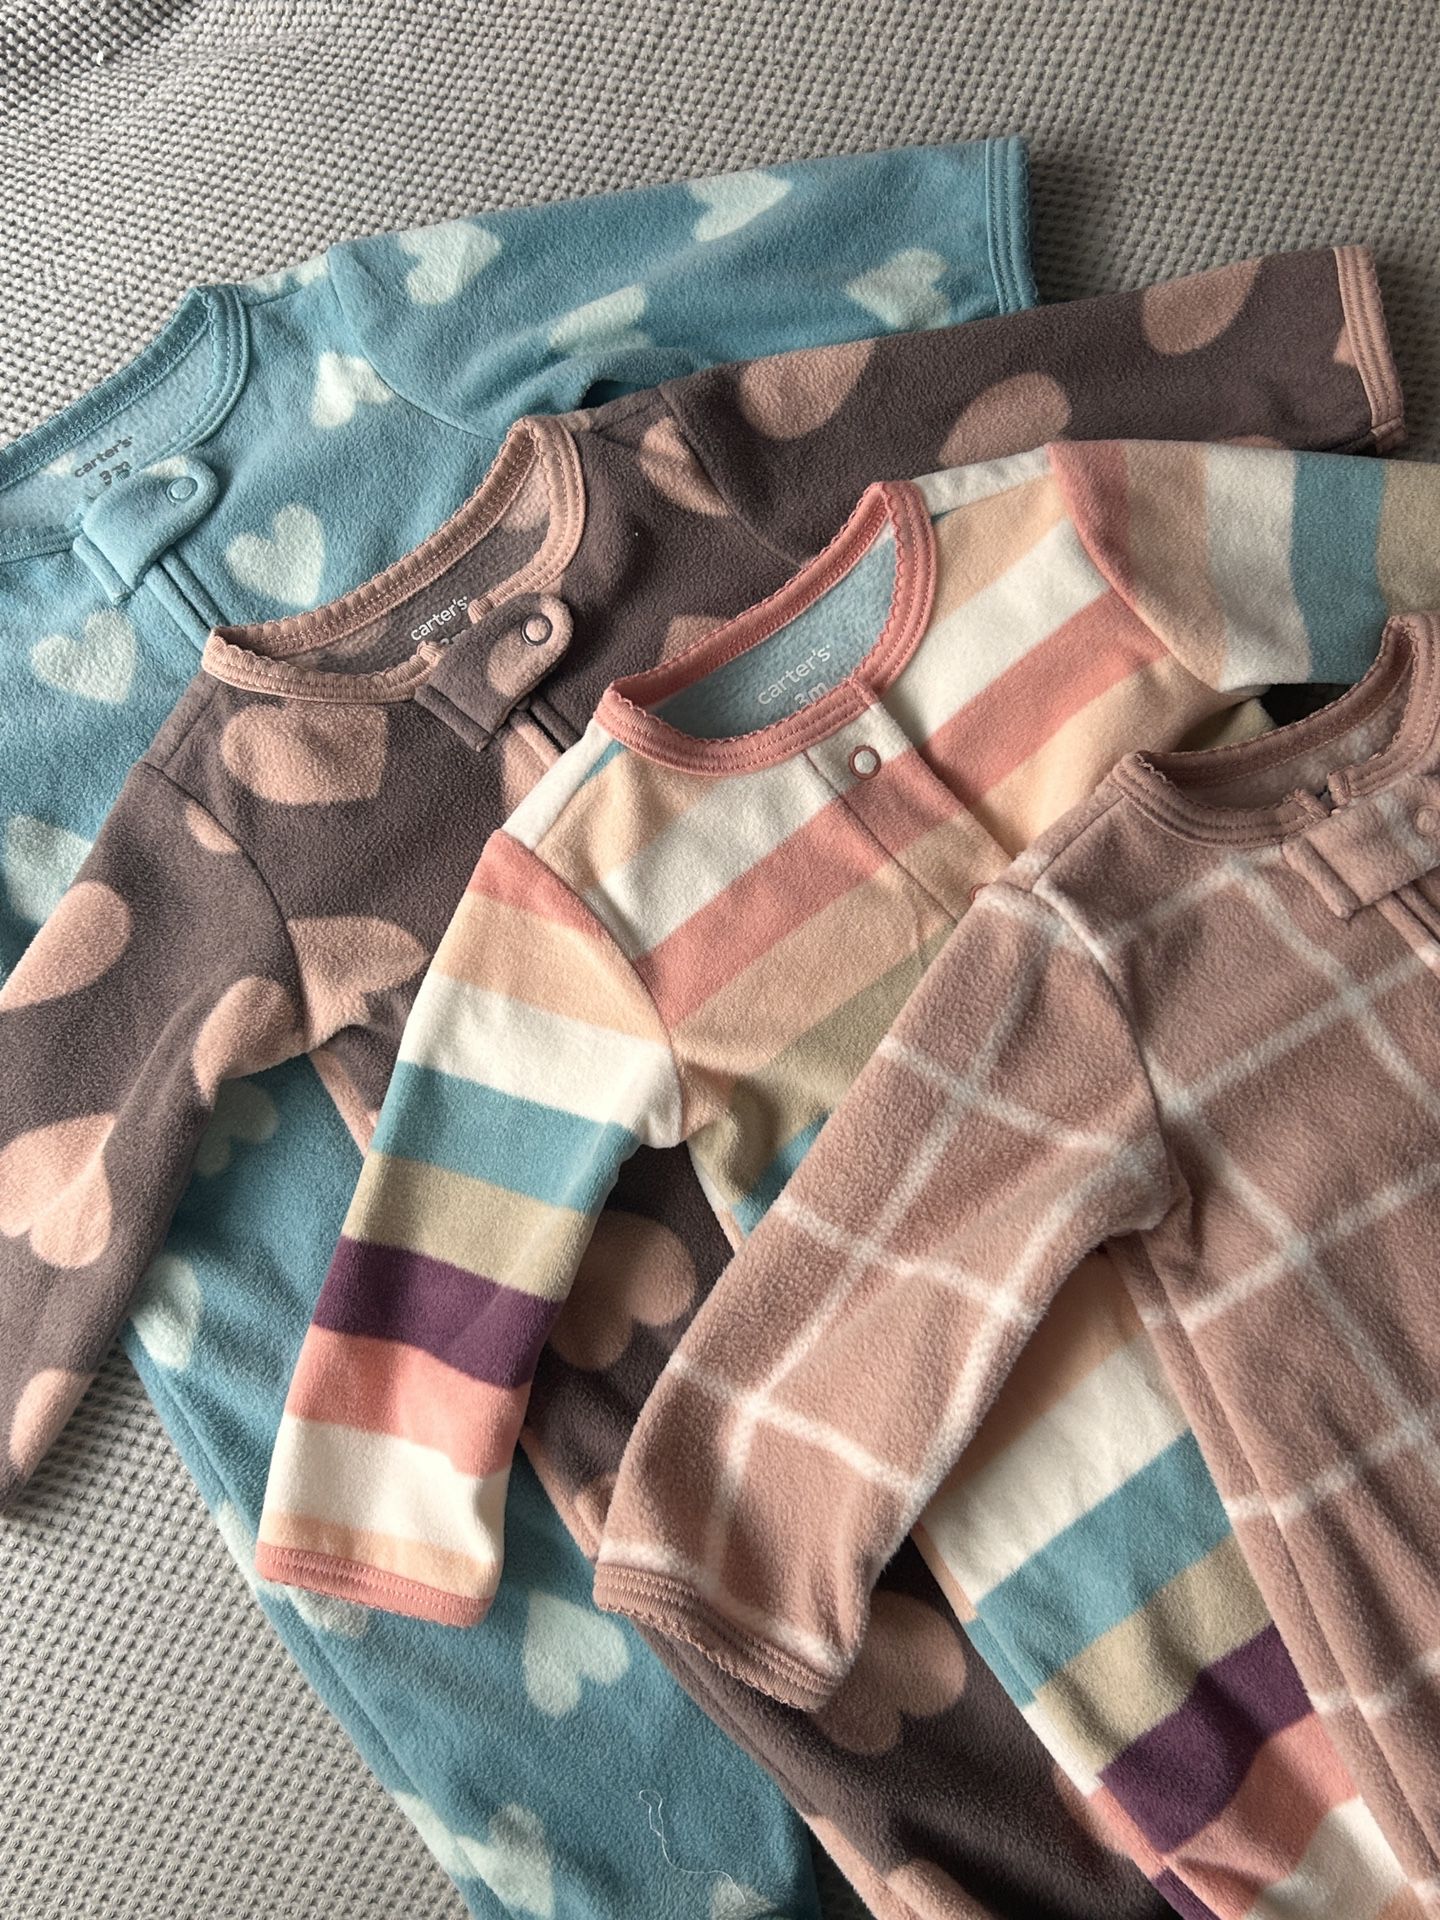 Baby Fleece Sleep & play pajama’s Carter’s size 3 months